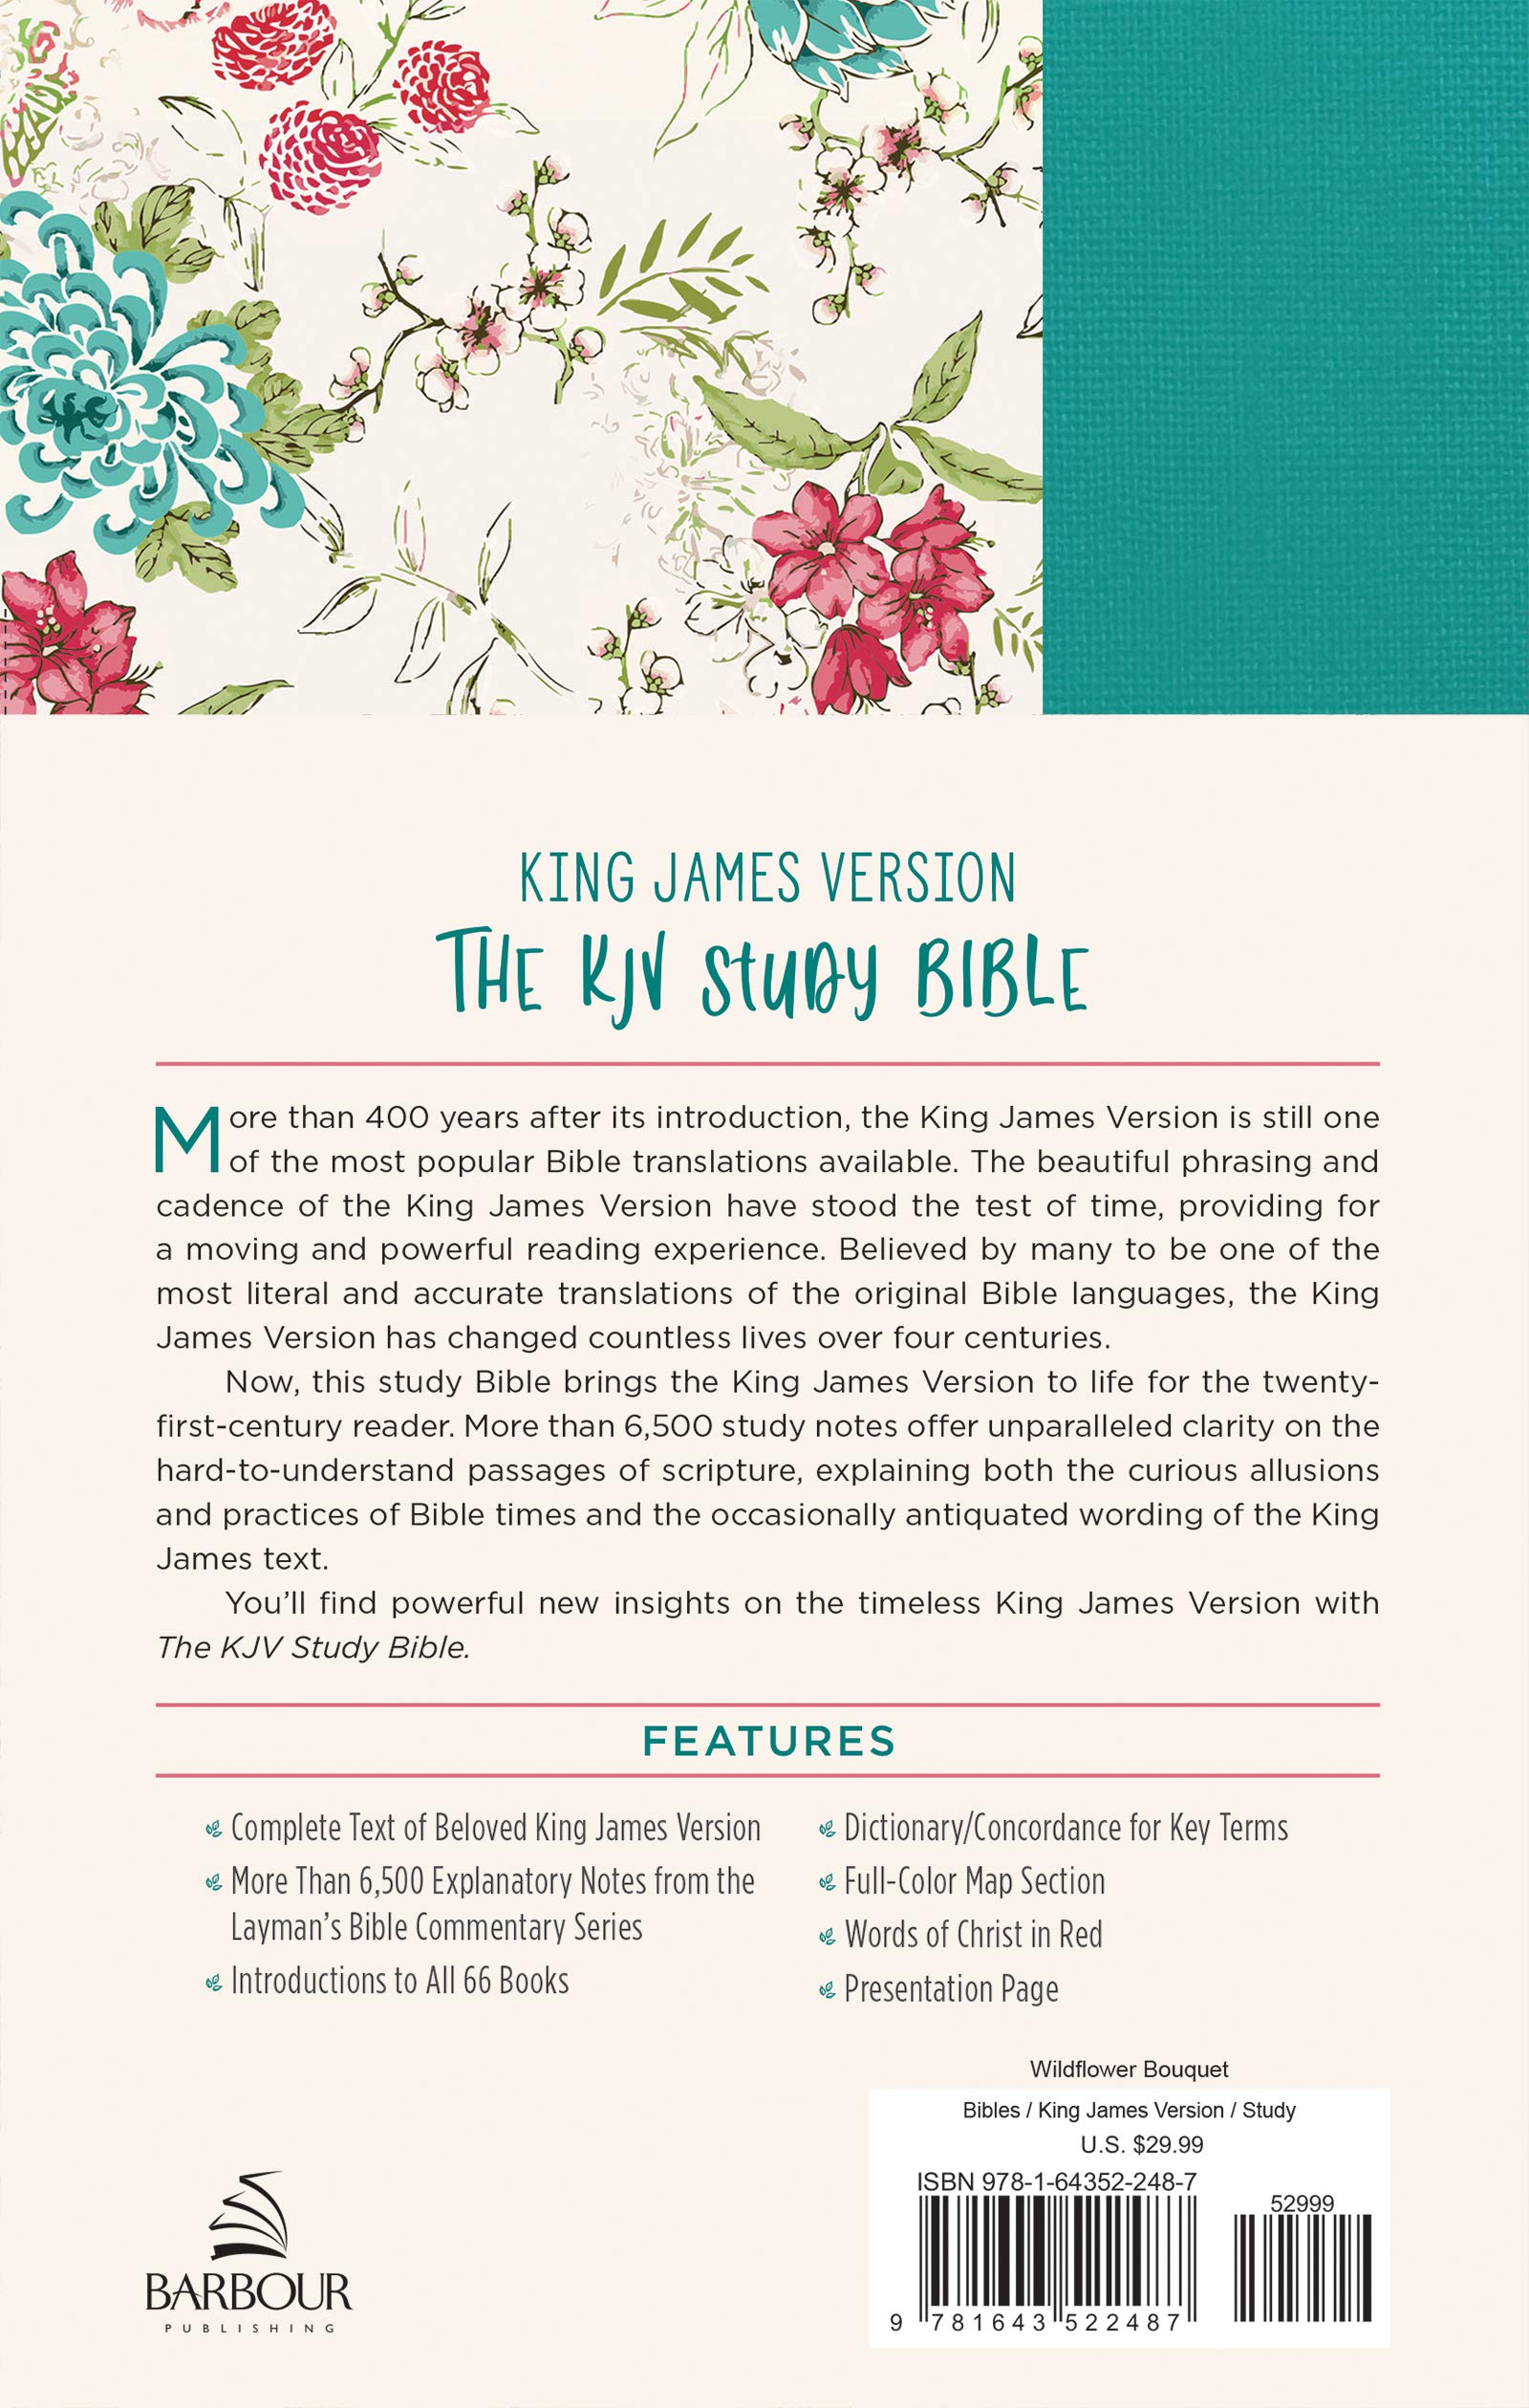 KJV Study Bible (Wildflower Bouquet)